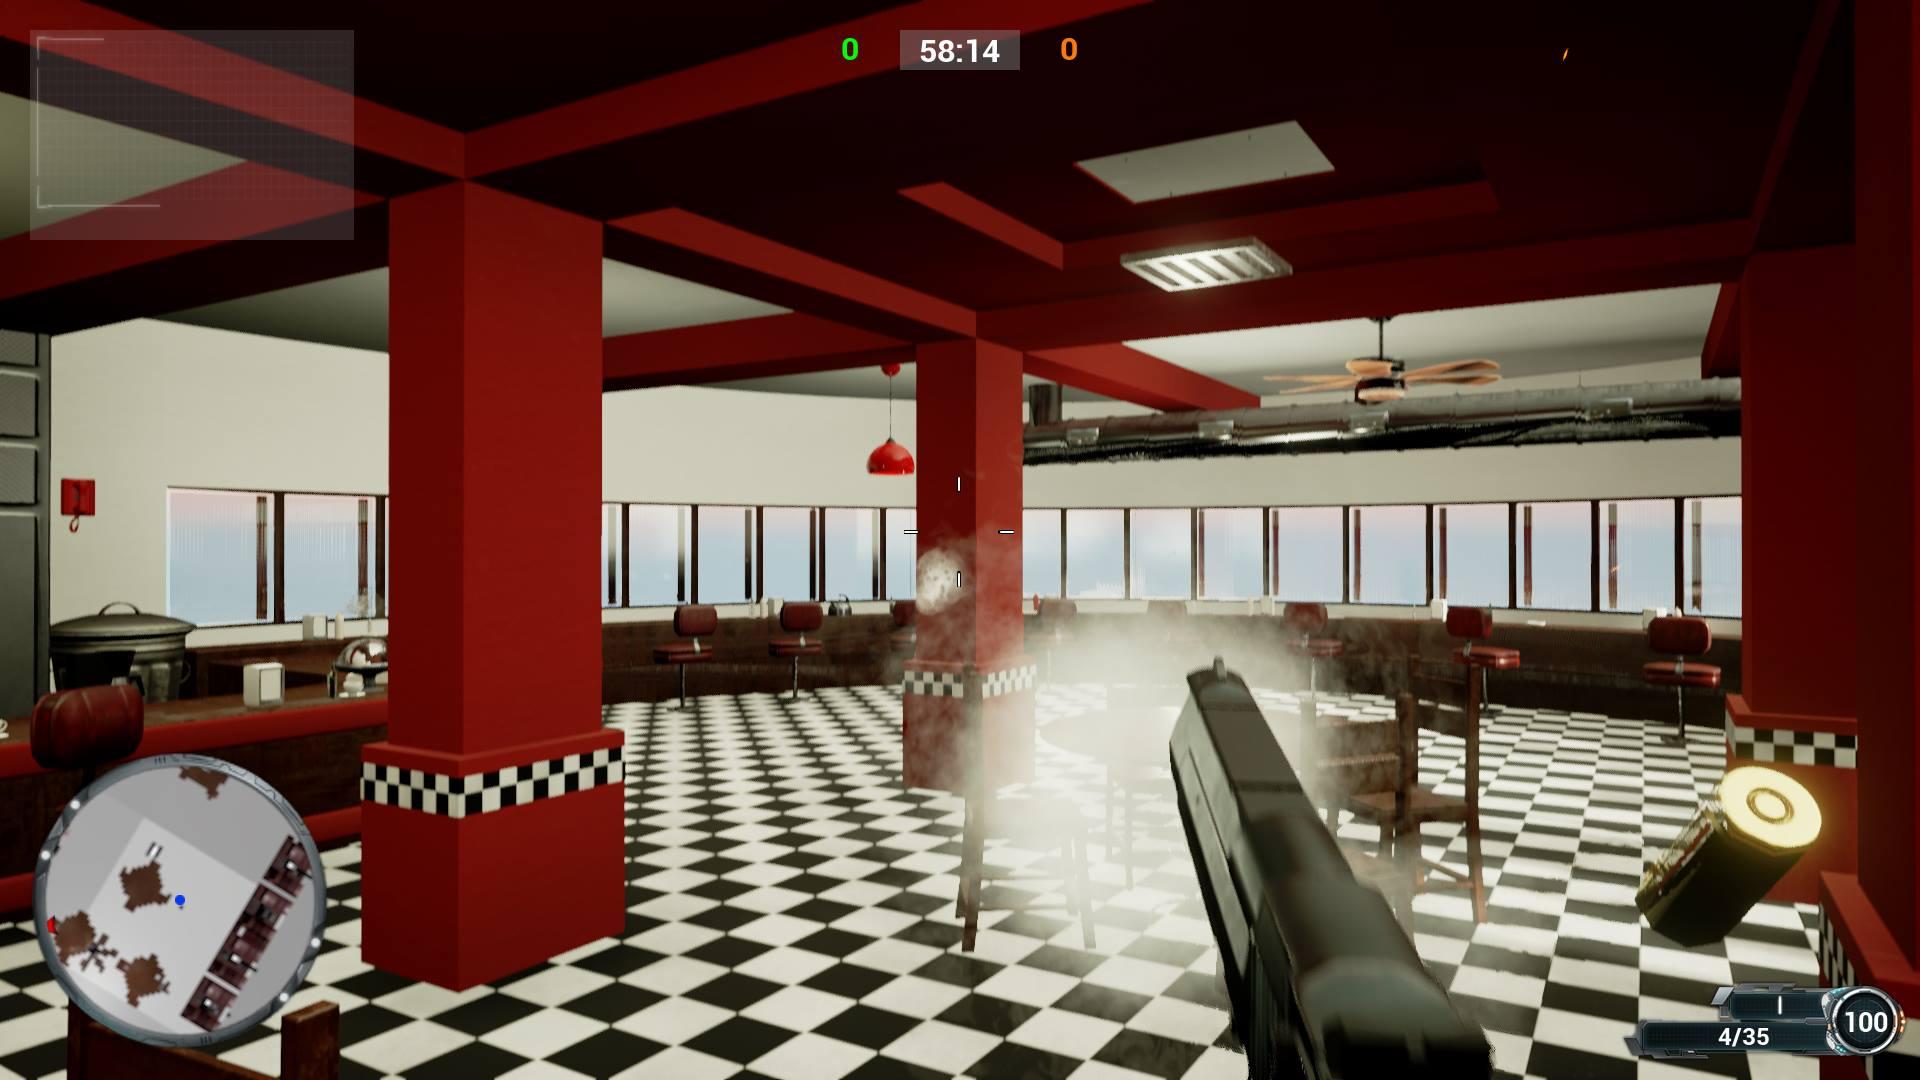 Screenshot №12 from game Shot Shot Tactic